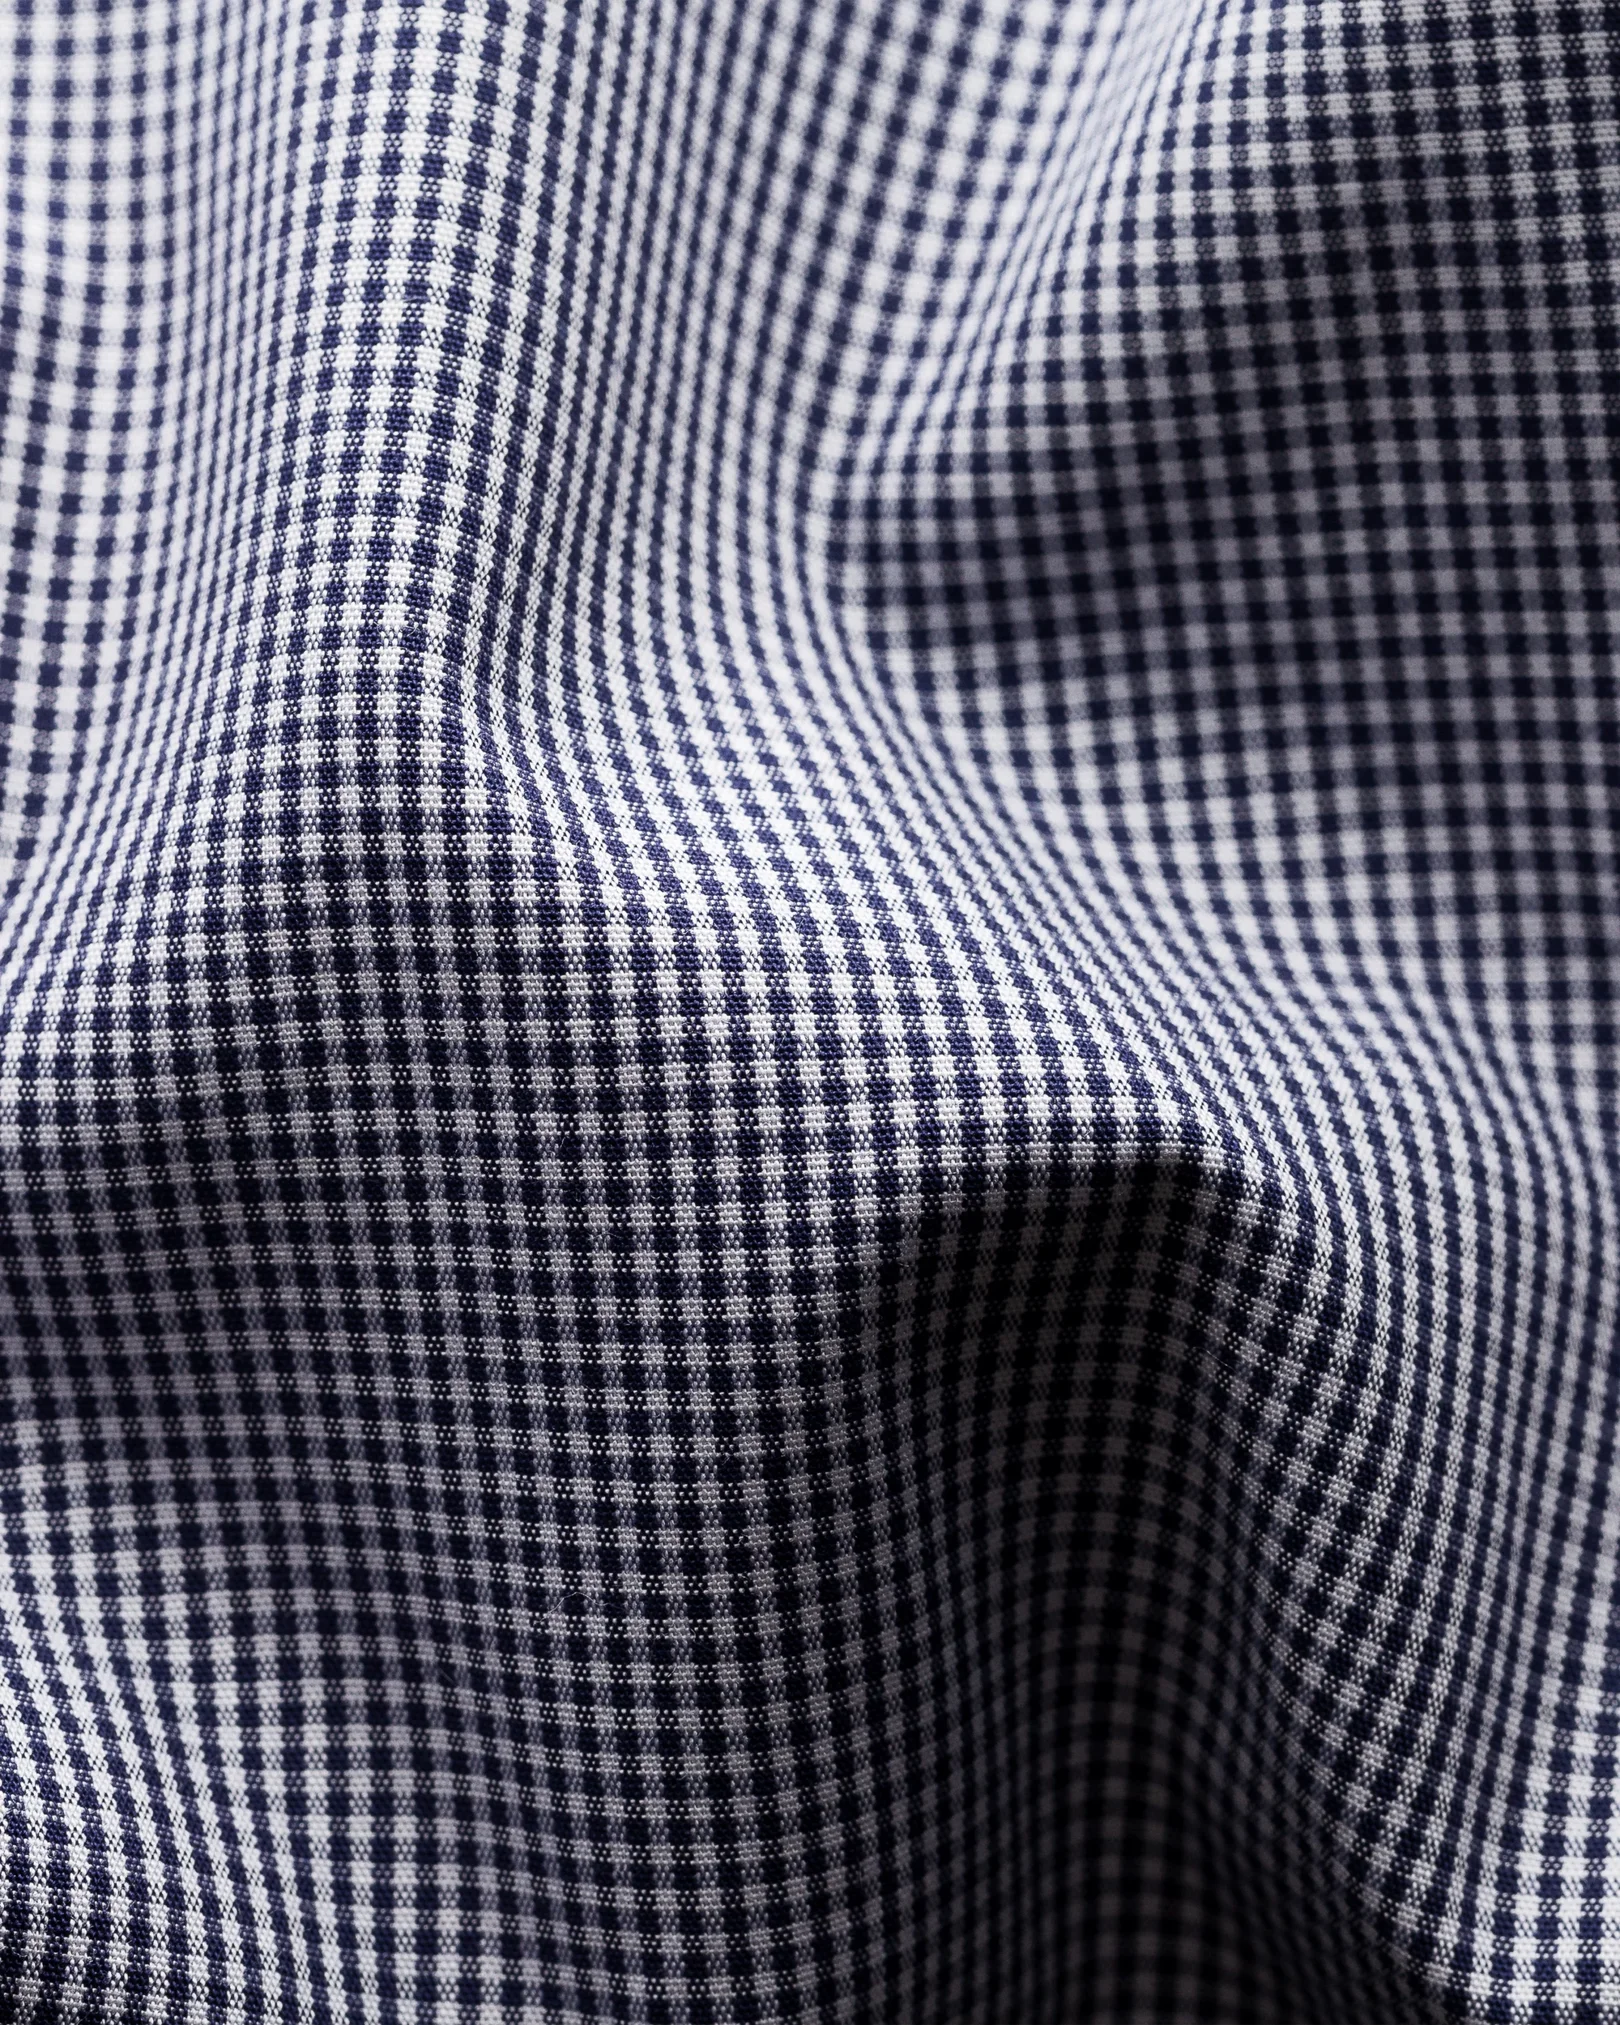 Eton - navy mini gingham poplin shirt extreme cut away